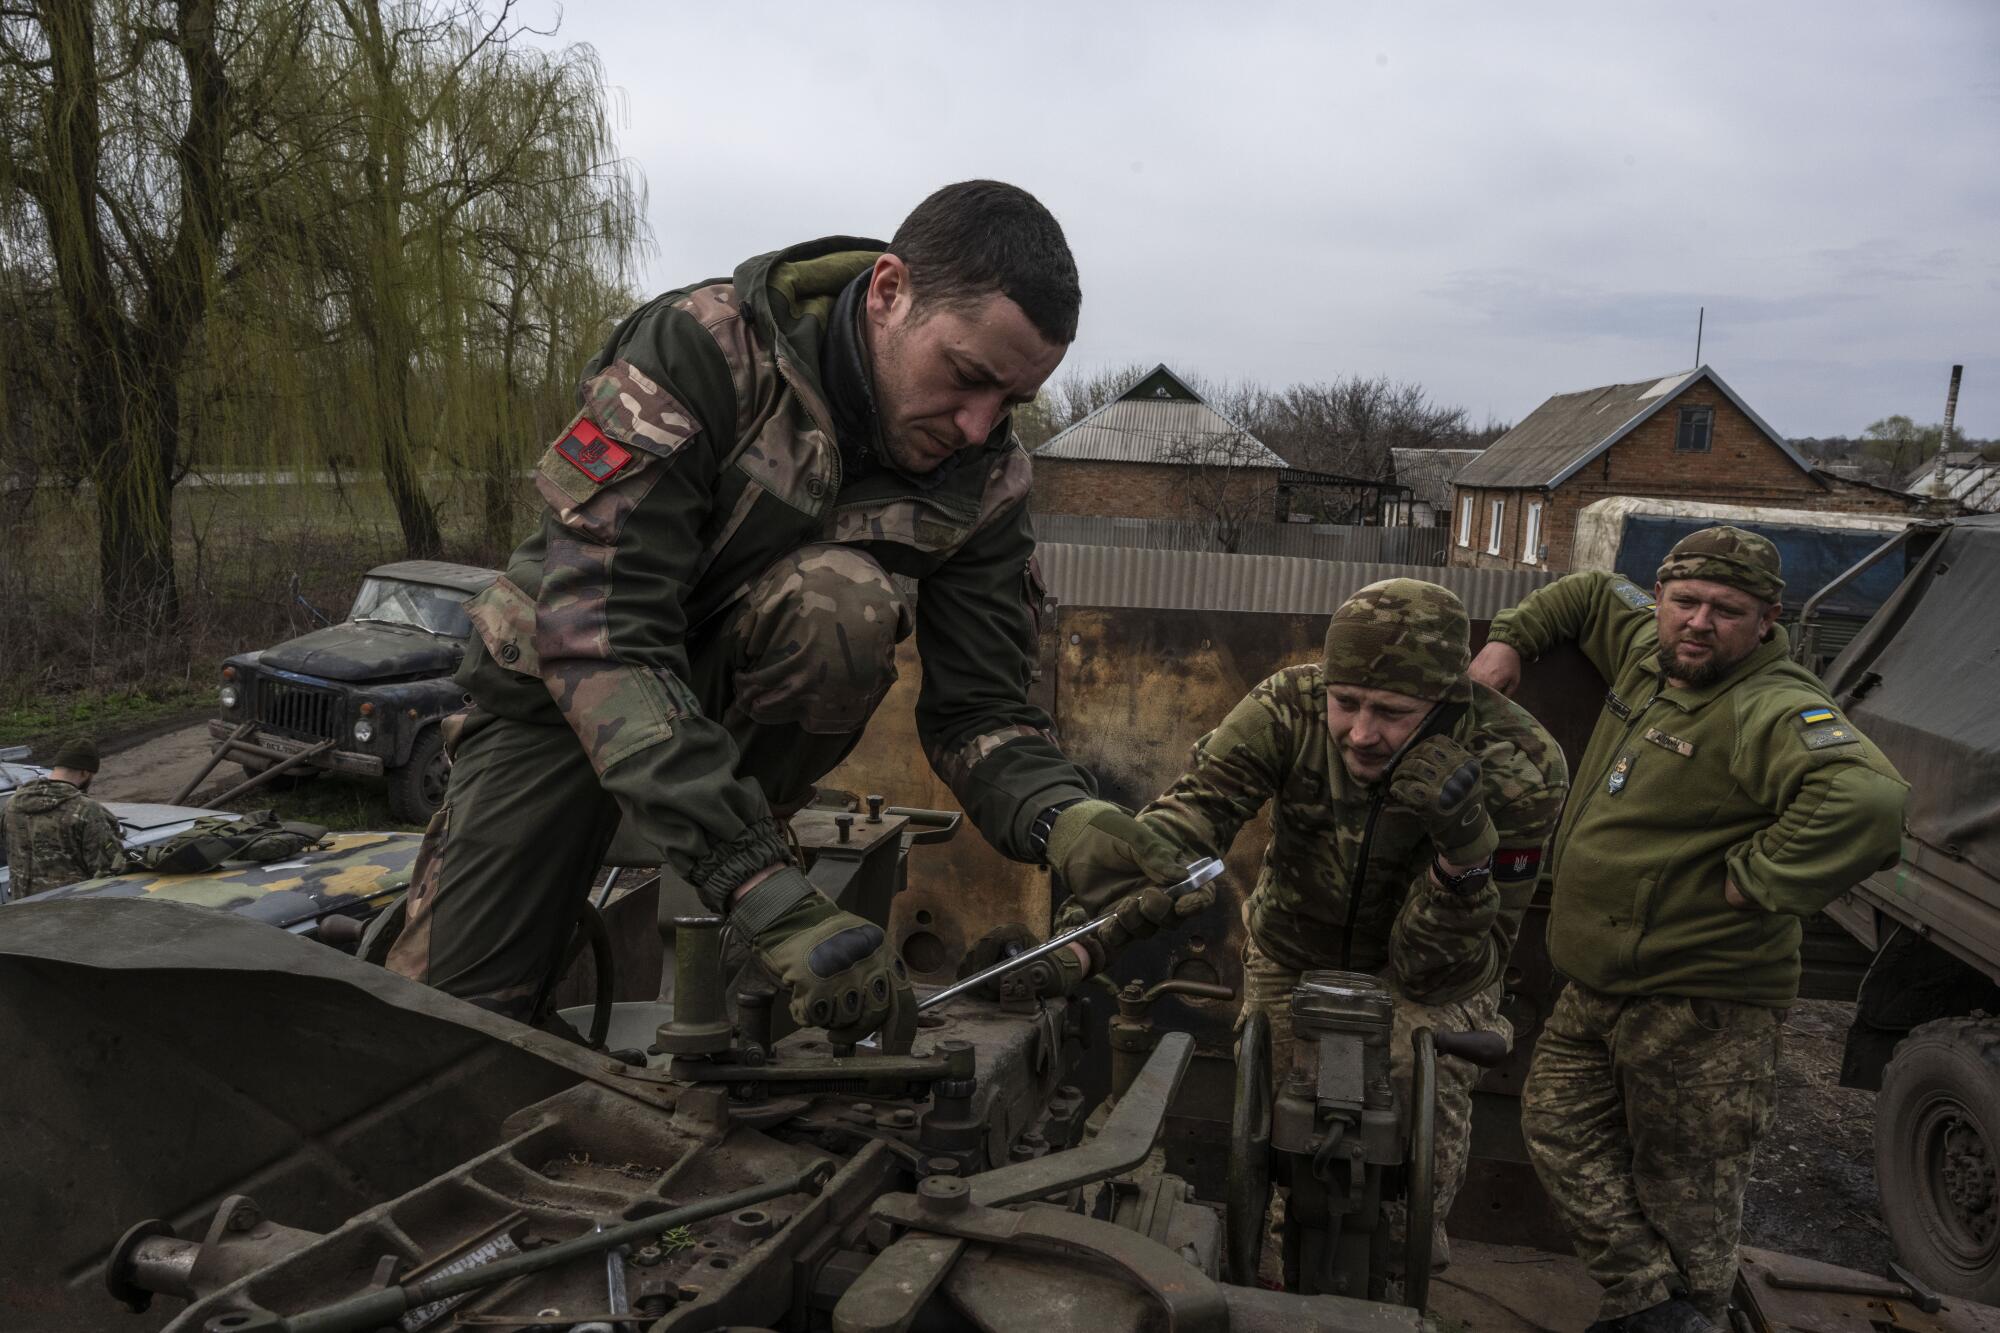 Ukrainian soldiers repairing a tank